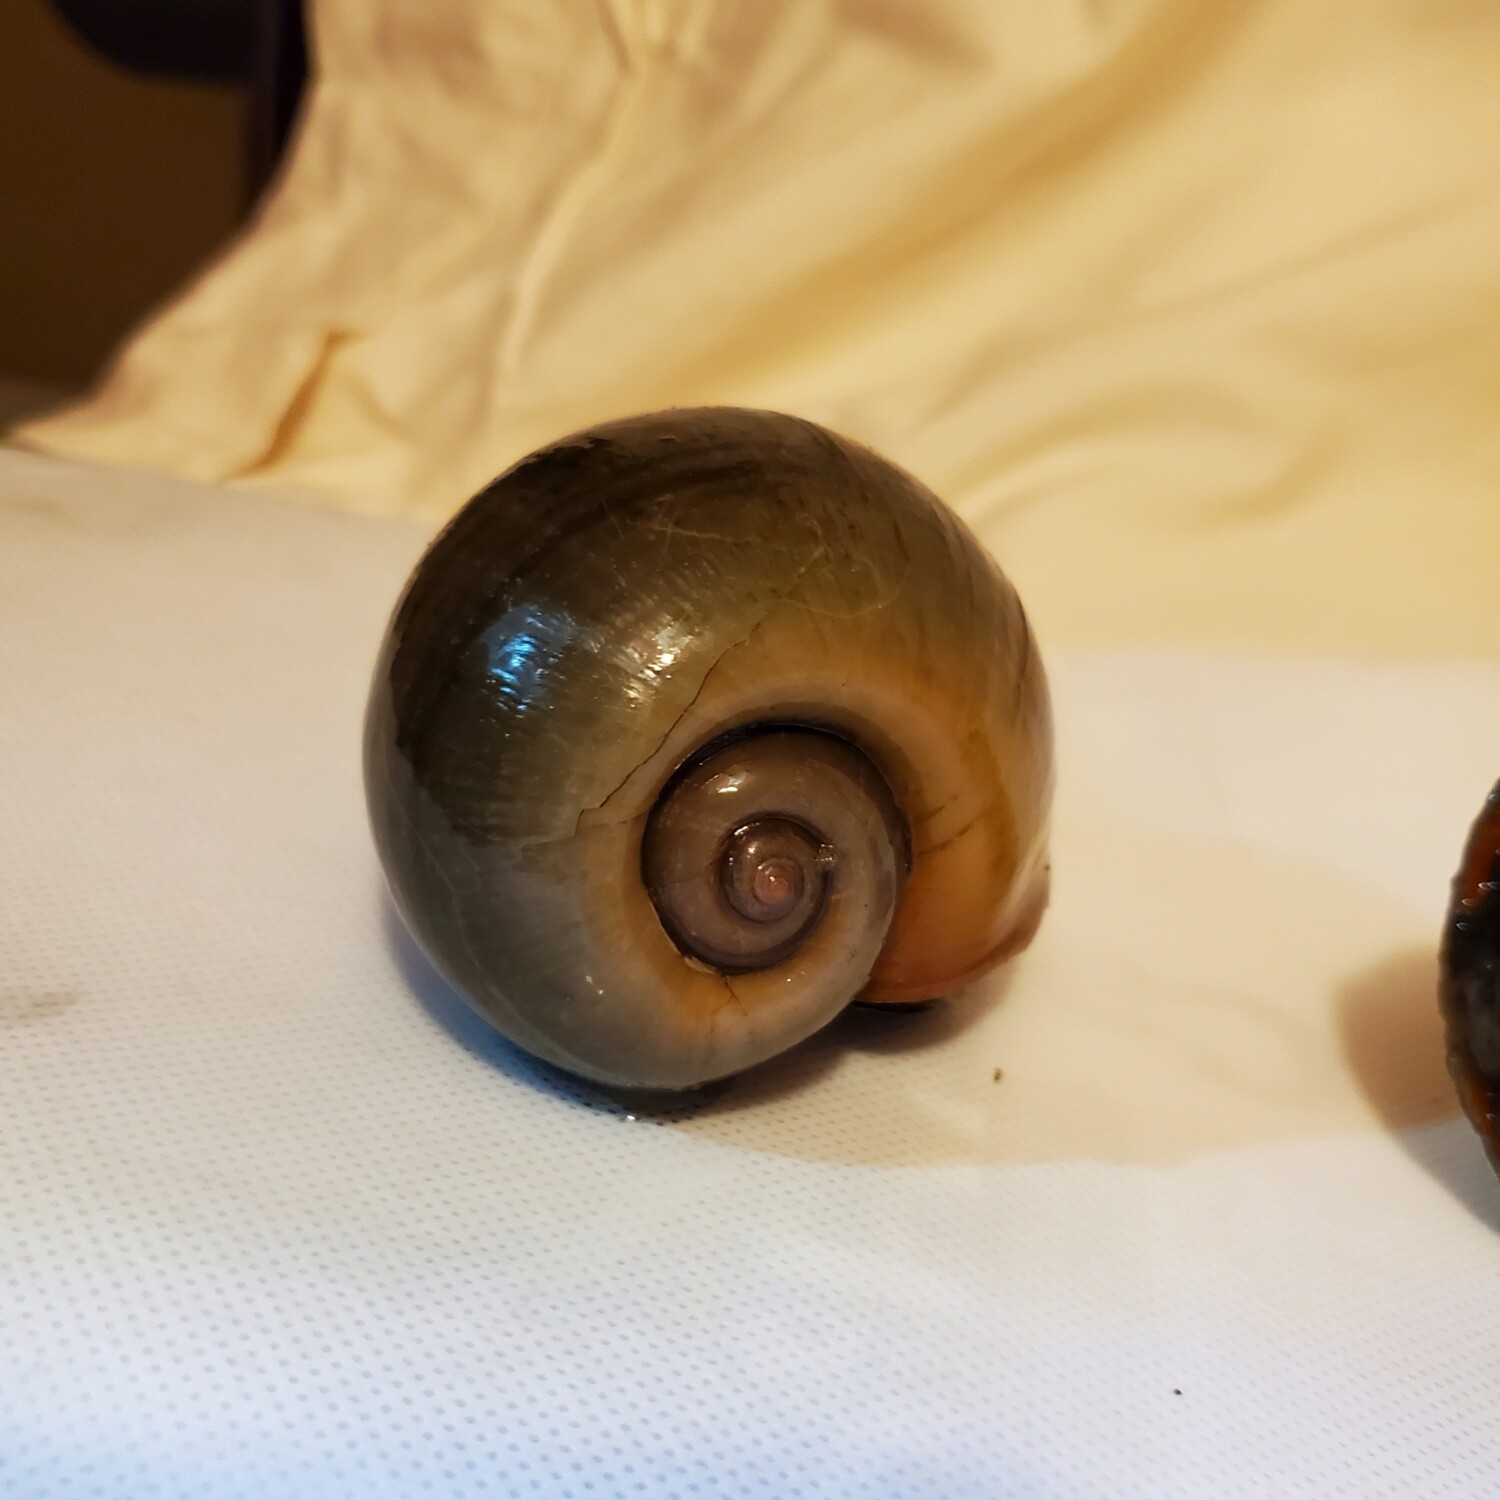 Live Xtra large snails by the pound